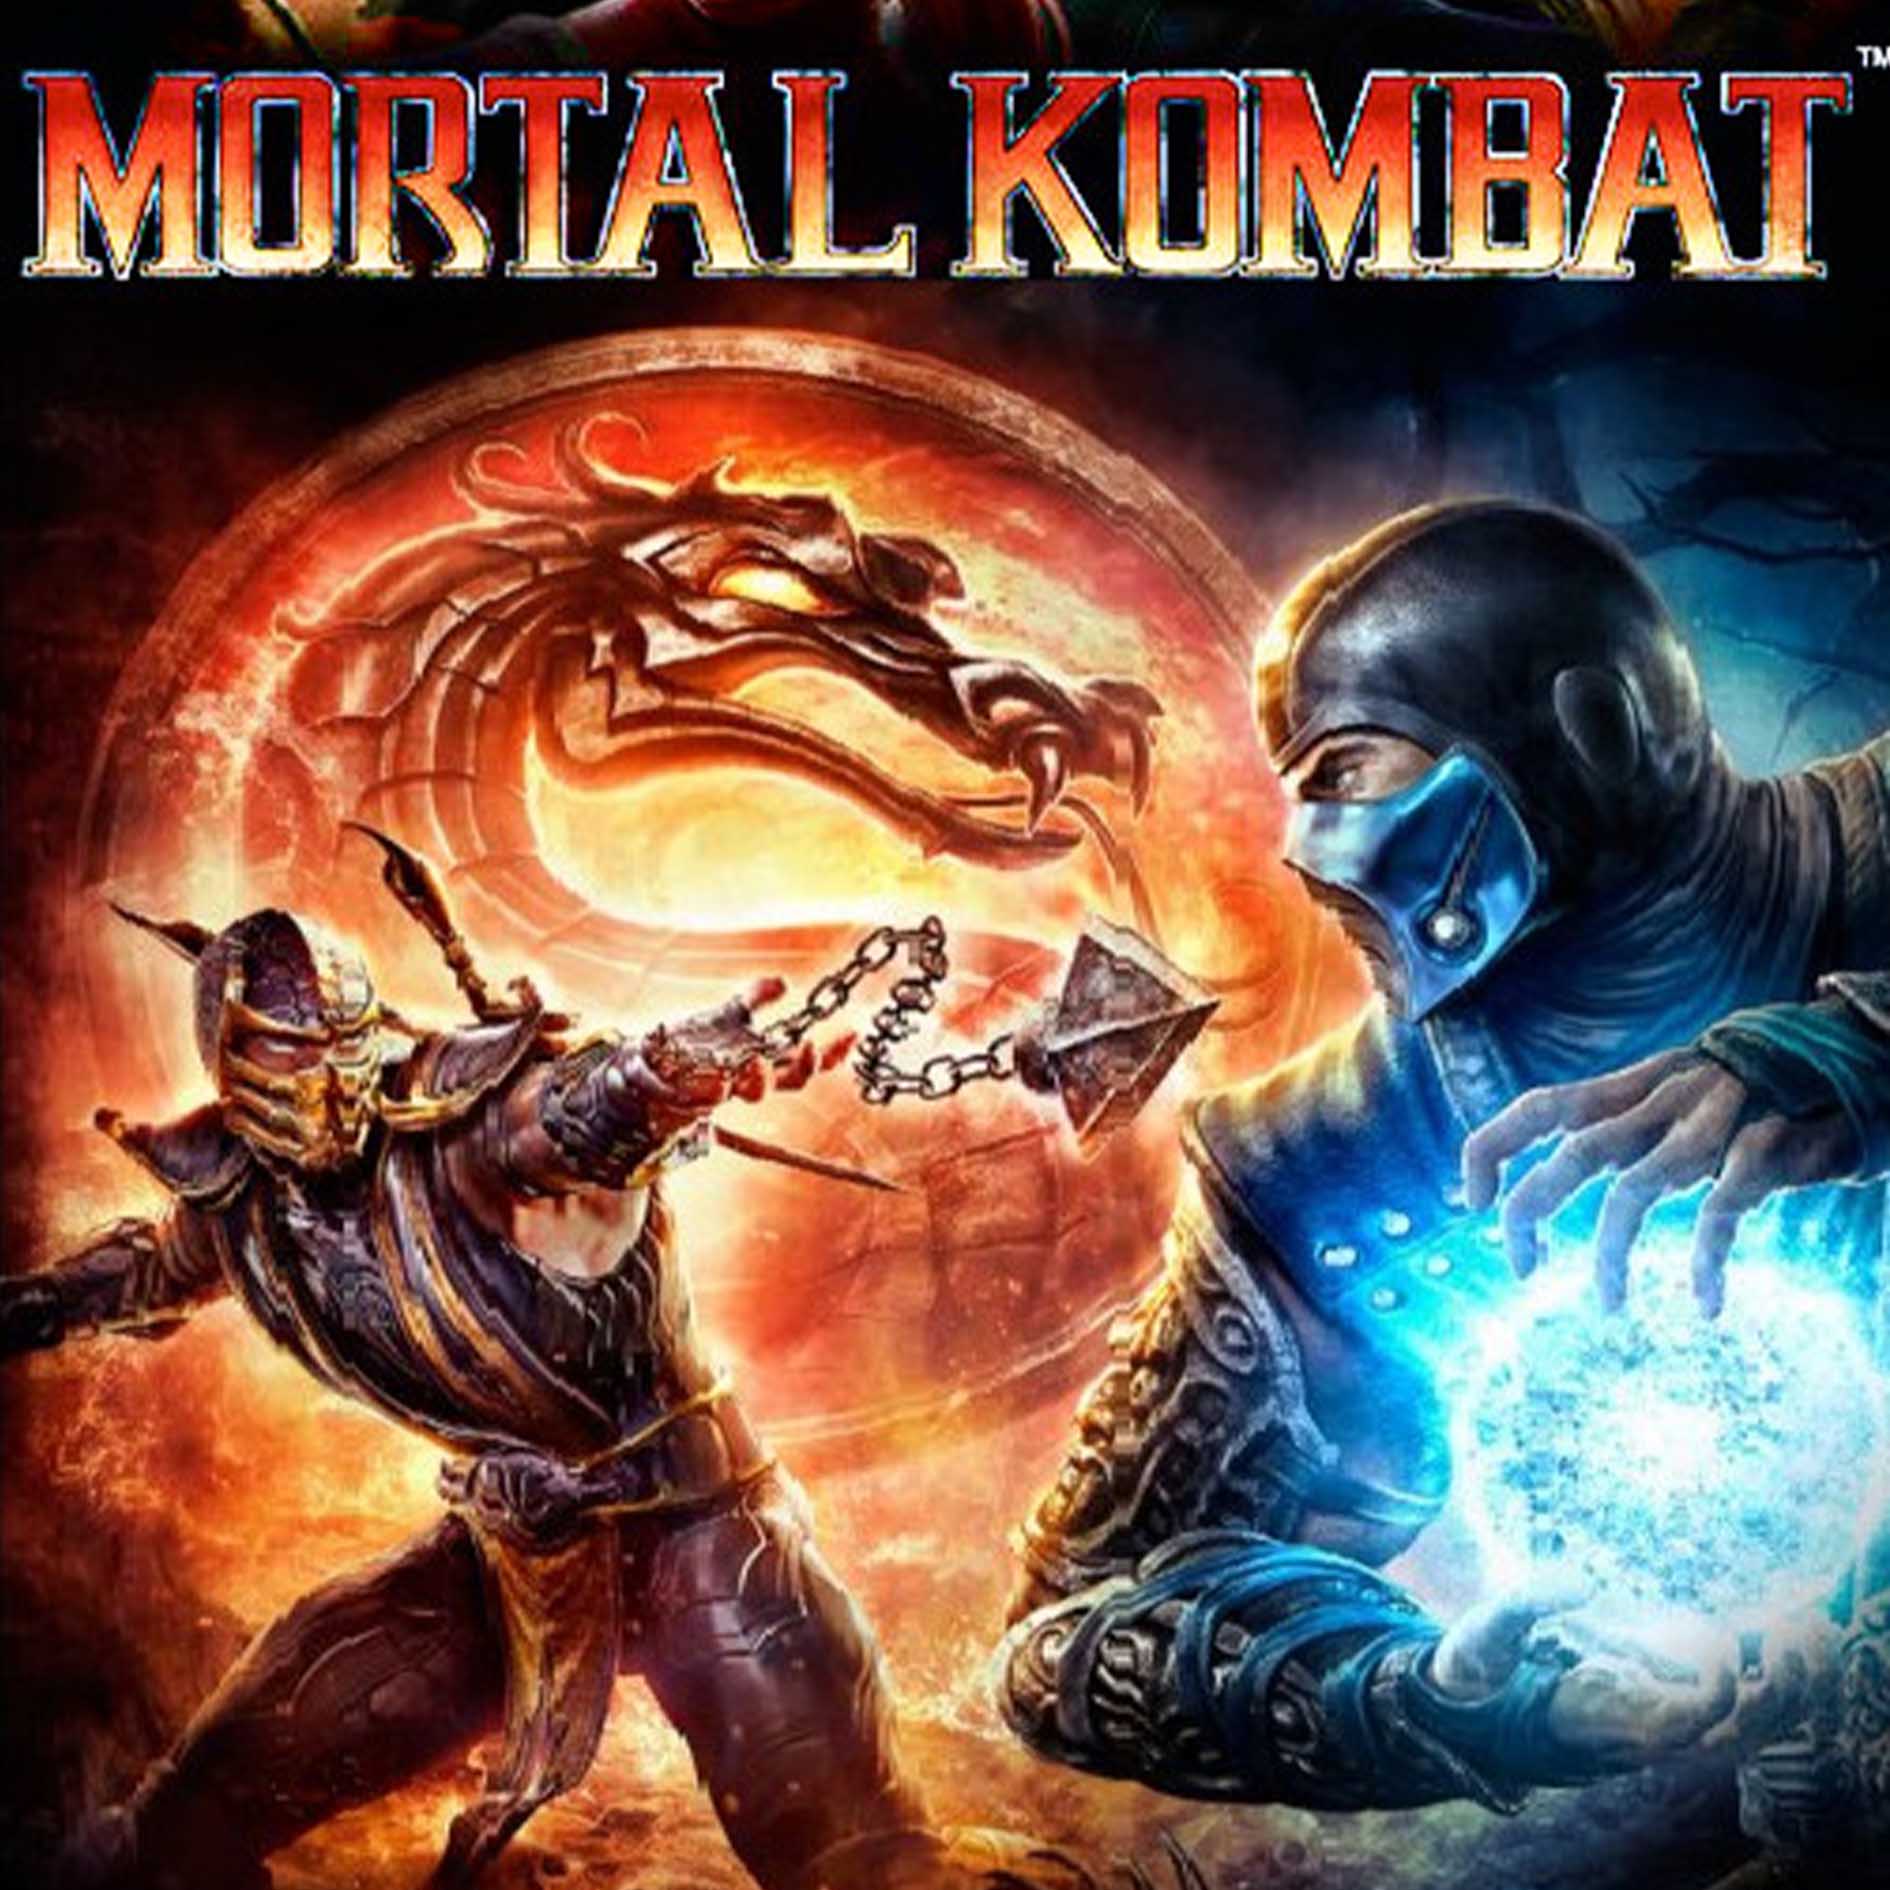 Механик мортал комбат 9. MK Komplete Edition Xbox 360. MK Komplete Edition ps3. Mortal Kombat 9 Komplete Edition обложка. Mortal Kombat Komplete Edition Xbox 360 обложка.